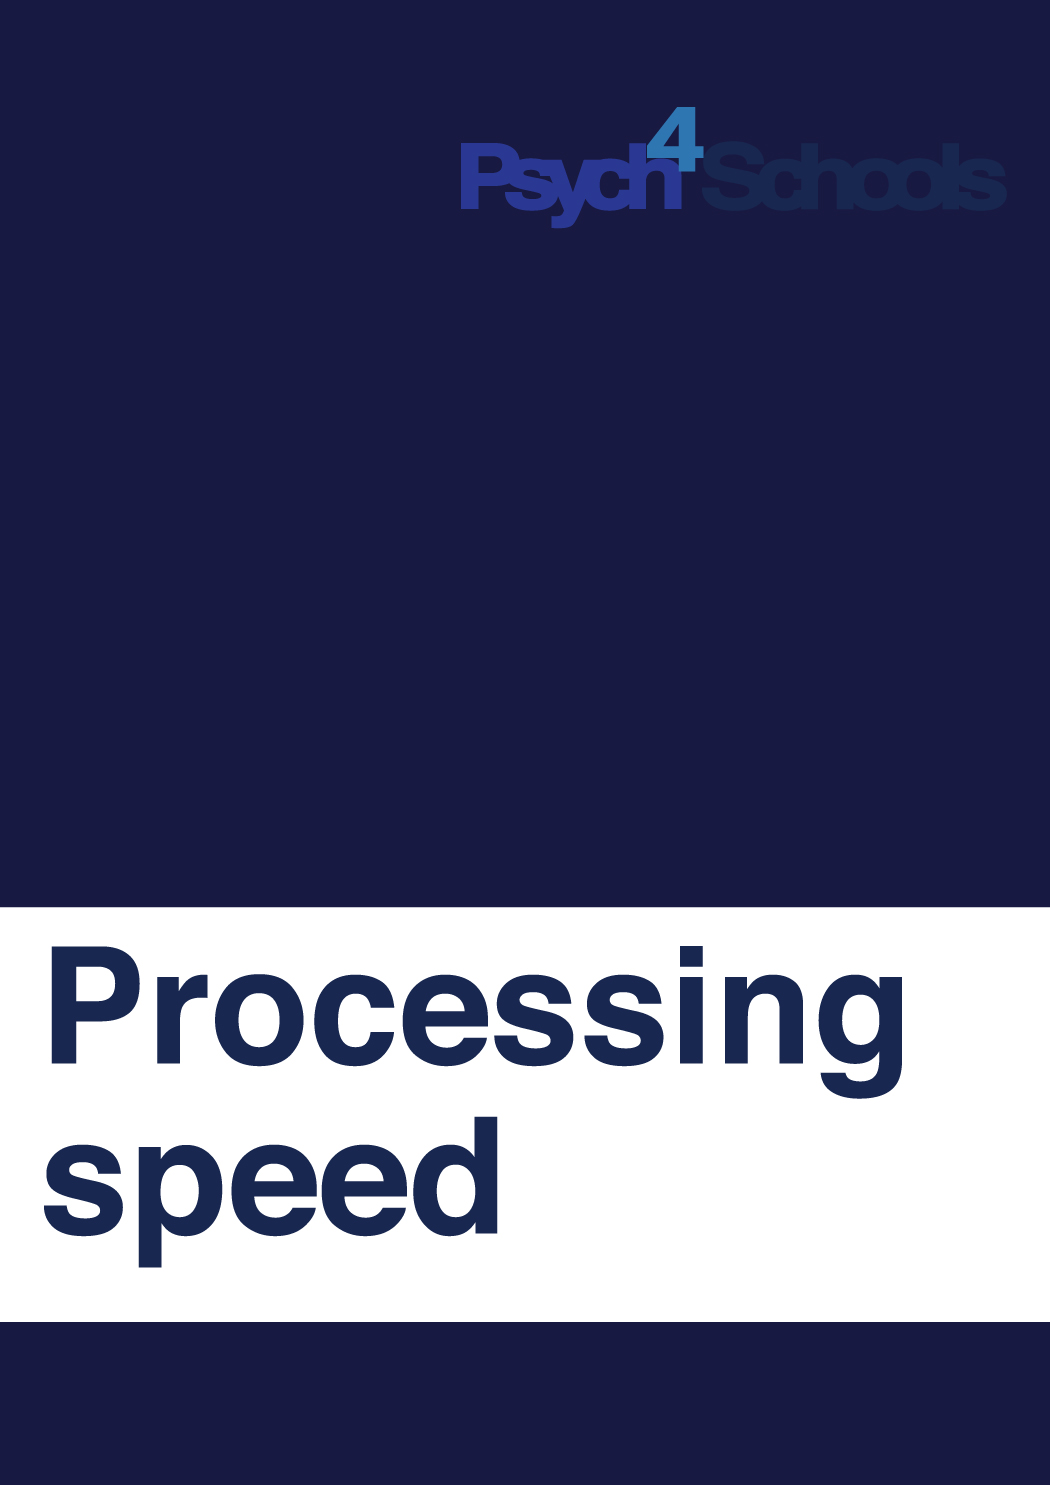 Poor Processing Speed